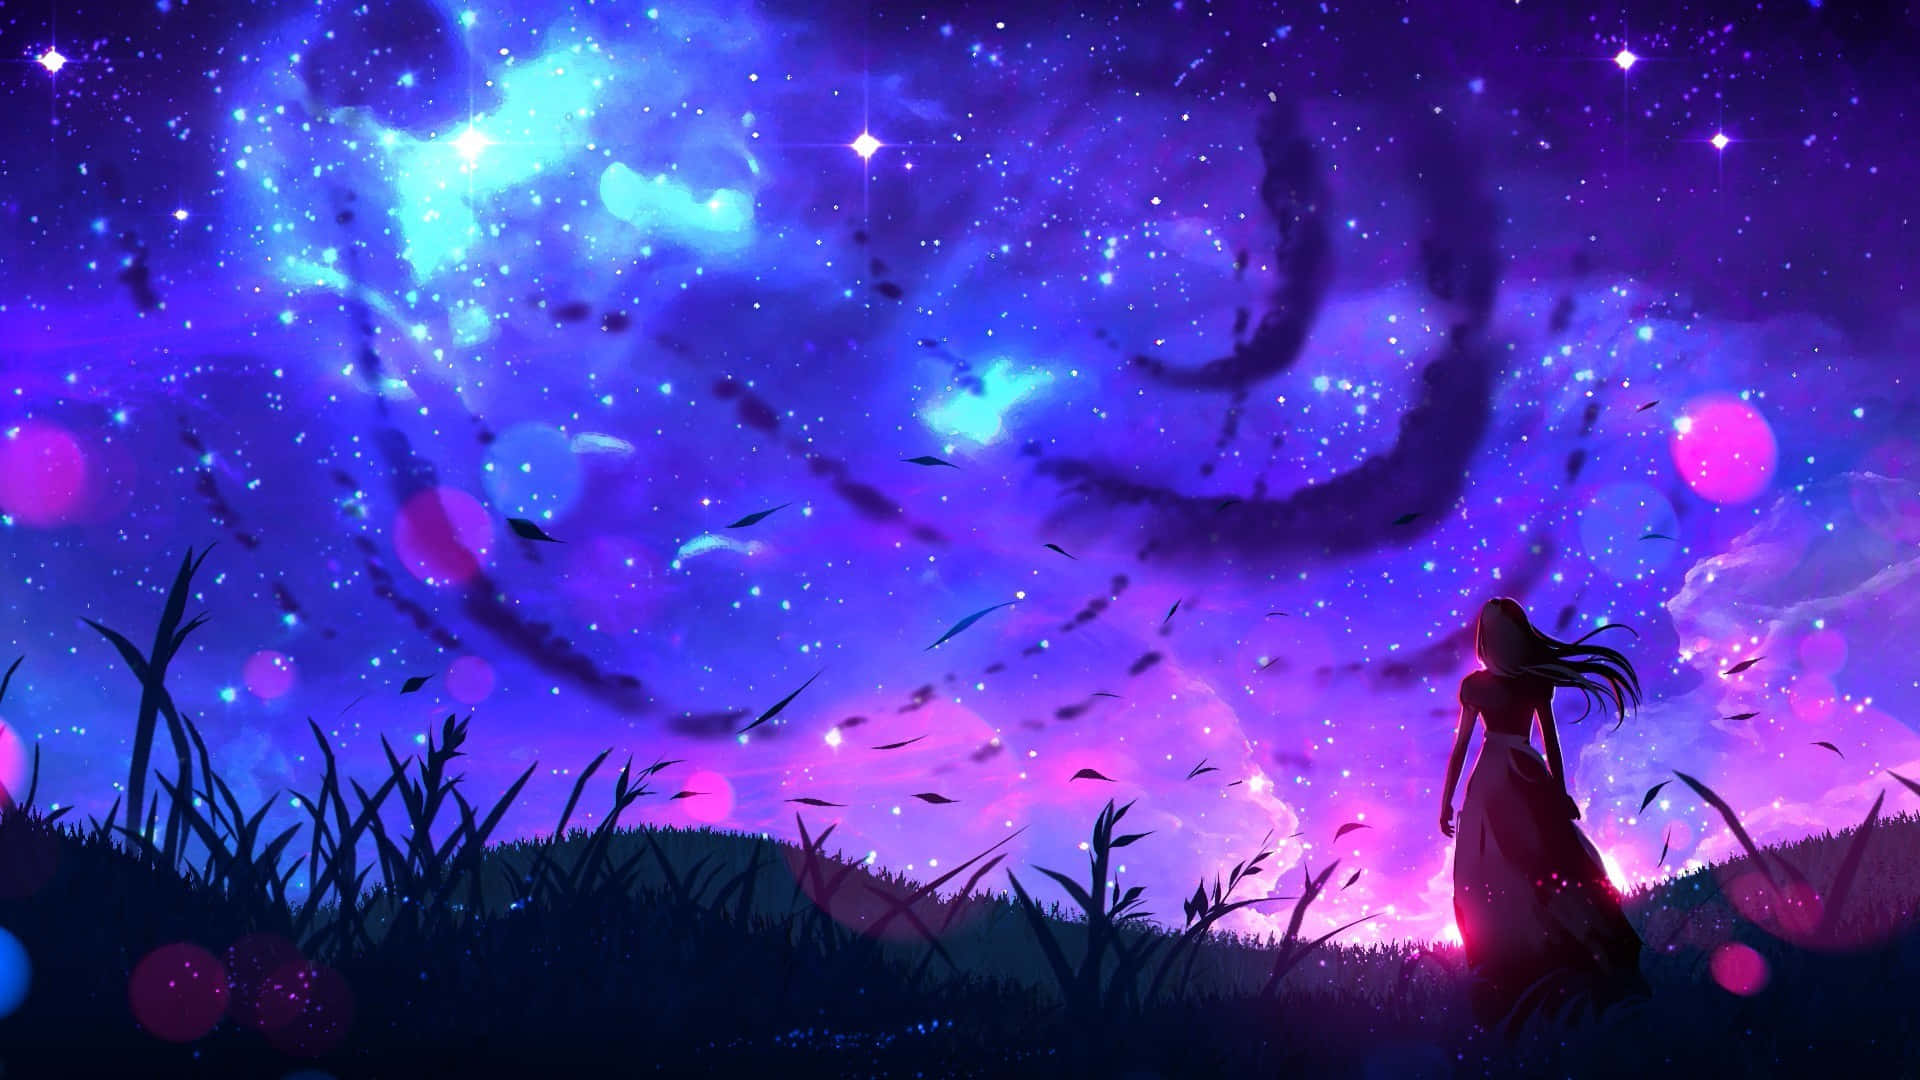 Tranquil Night Sky in Anime Art Wallpaper